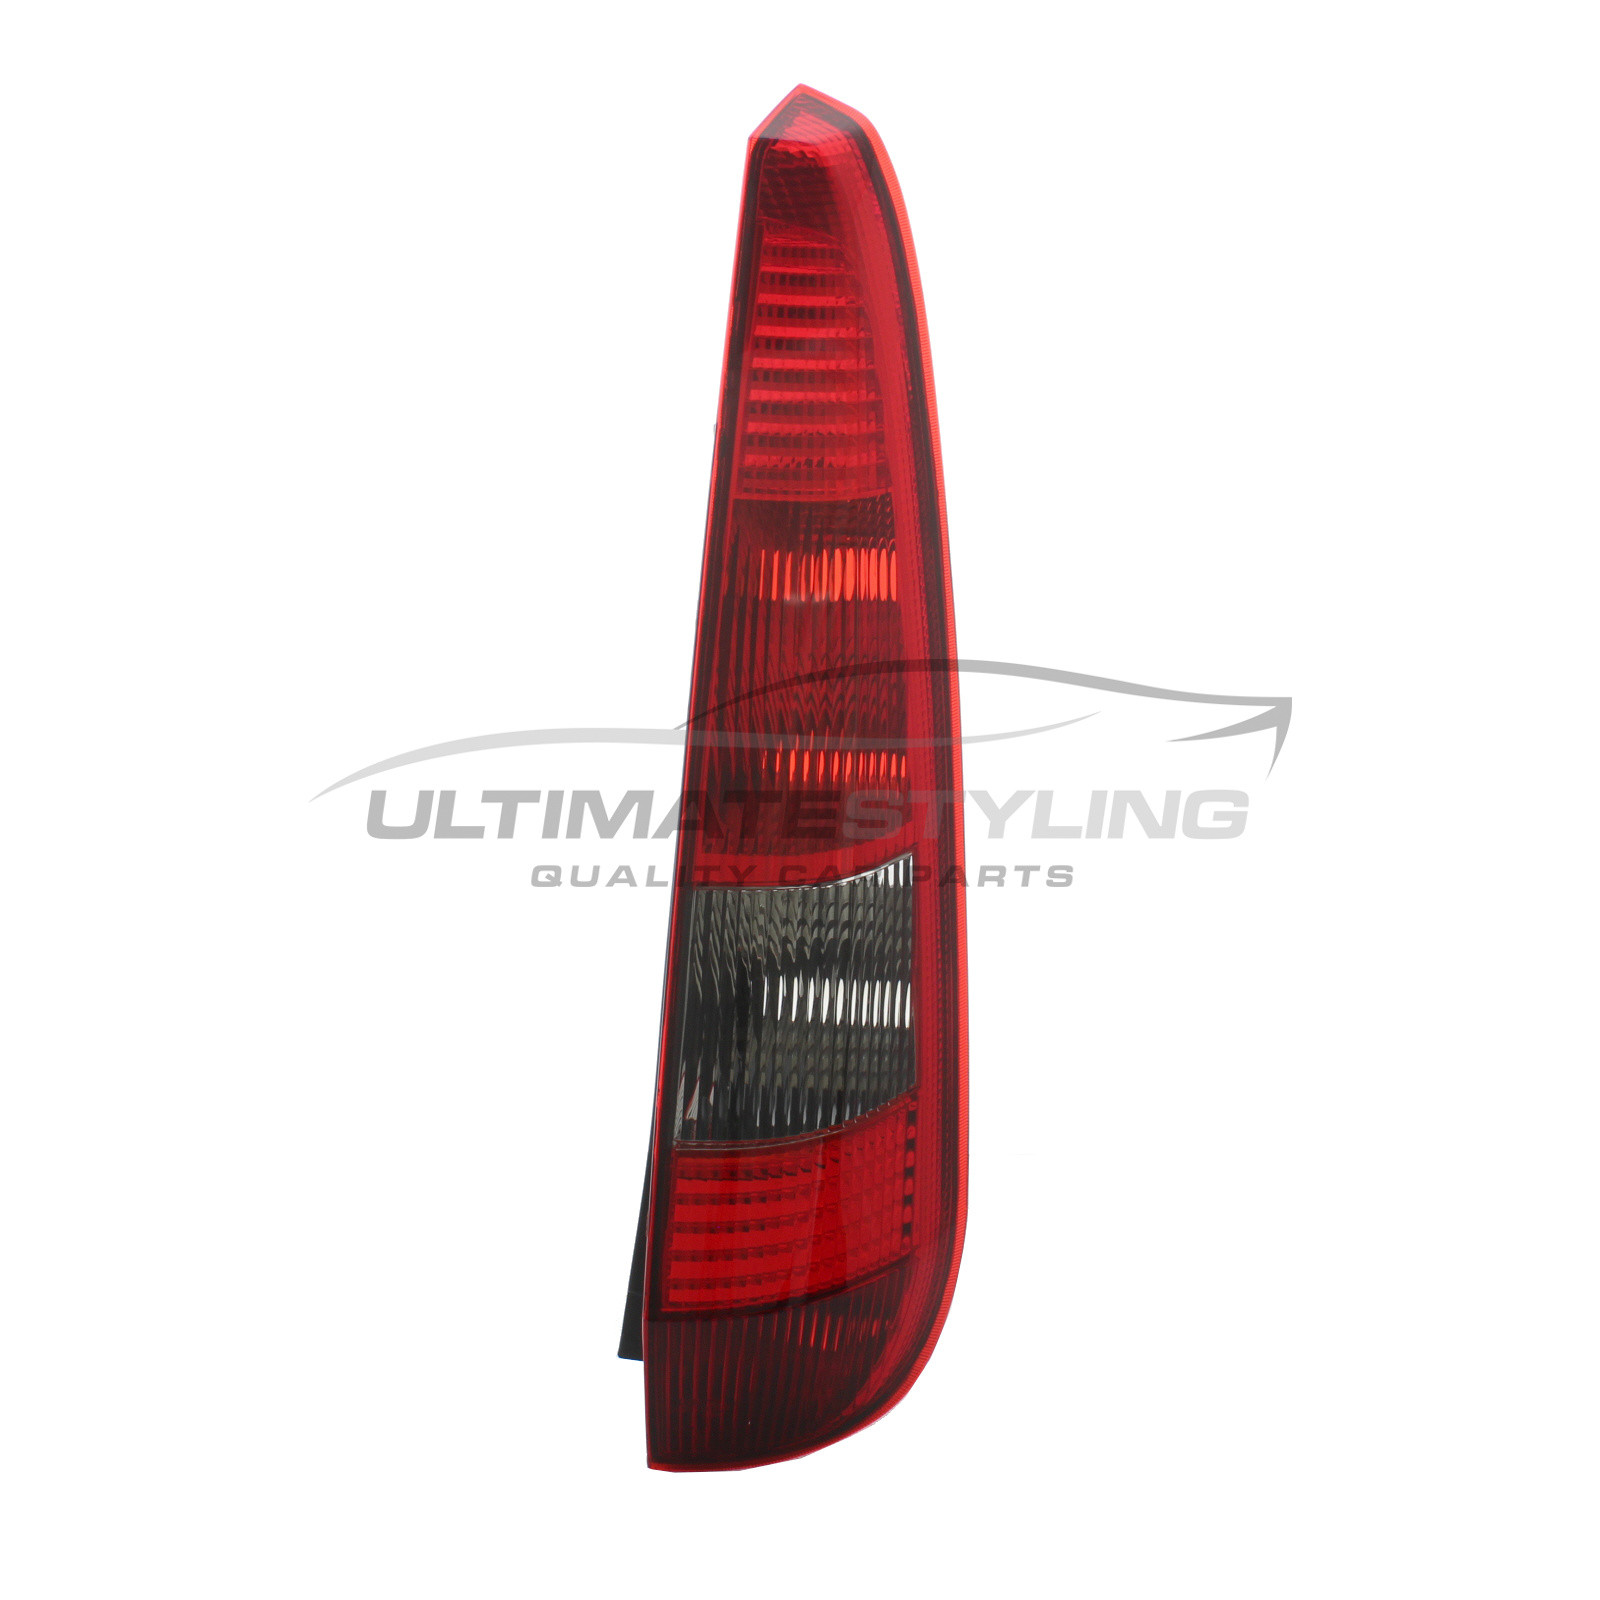 Rear Light / Tail Light for Ford Fiesta